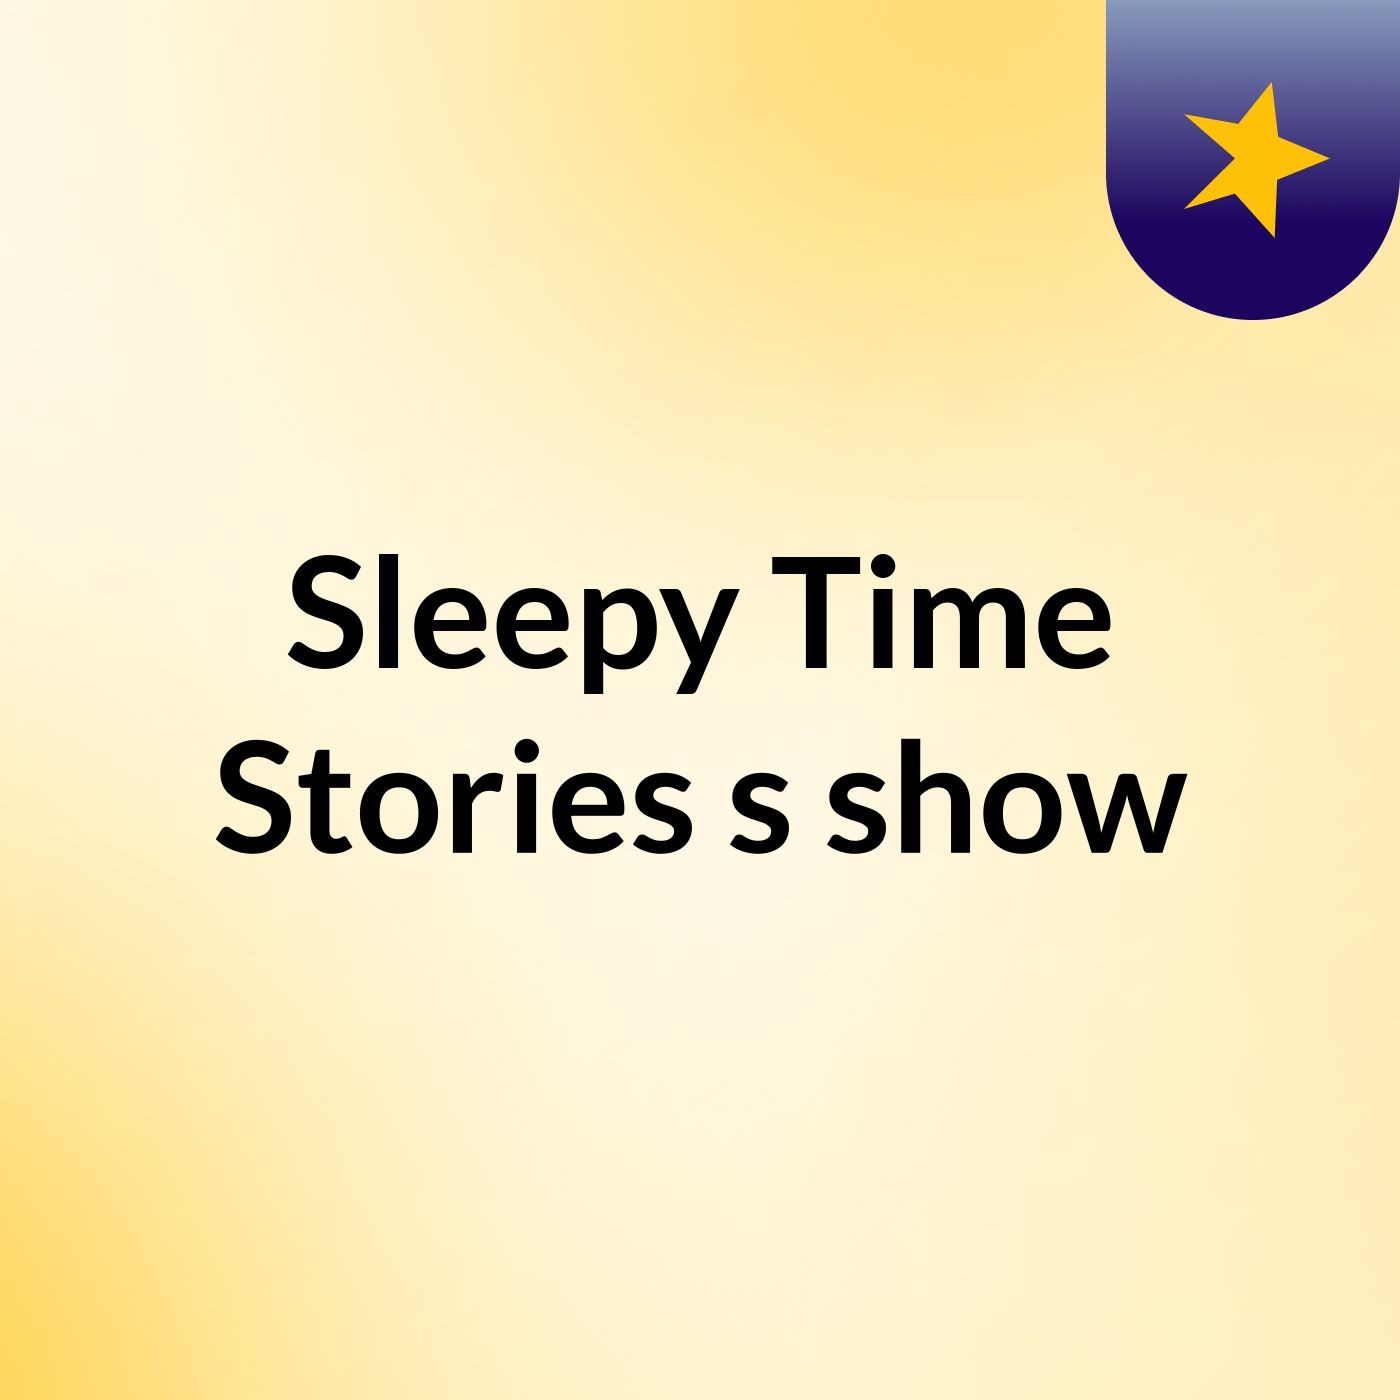 Sleepy Time Stories's show